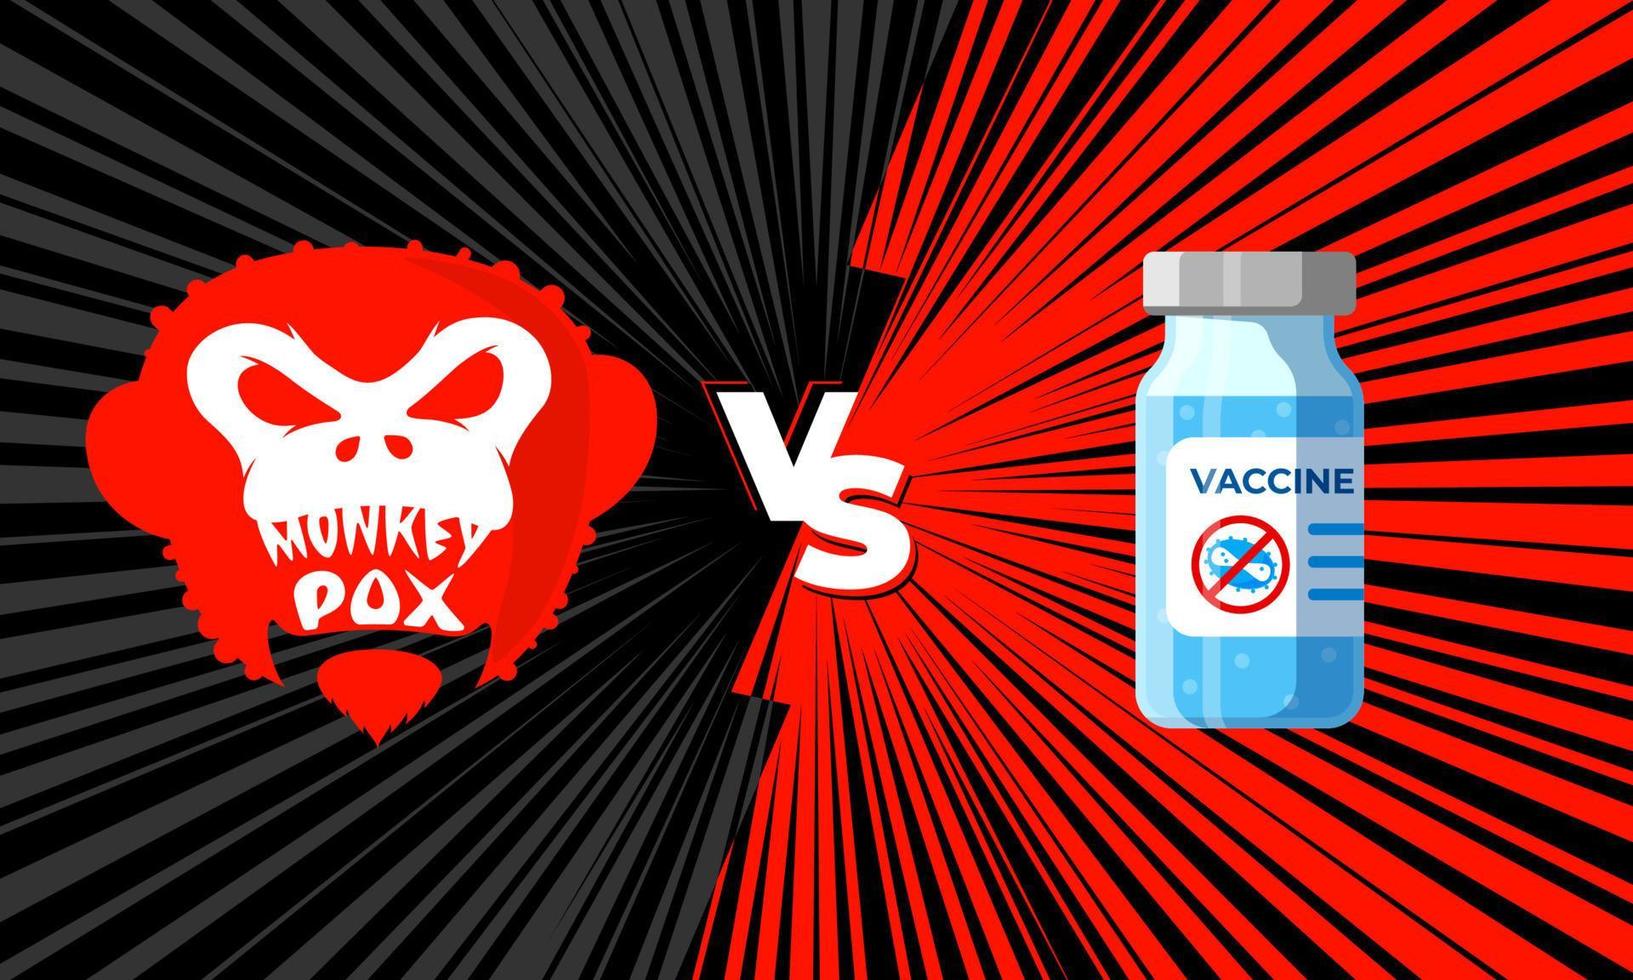 New pandemic monkeypox virus versus vaccination. Battle of medical vaccine vs monkey pox disease outbreak infection. MPV MPVX smallpox danger and public health immunization. Vector eps concept banner